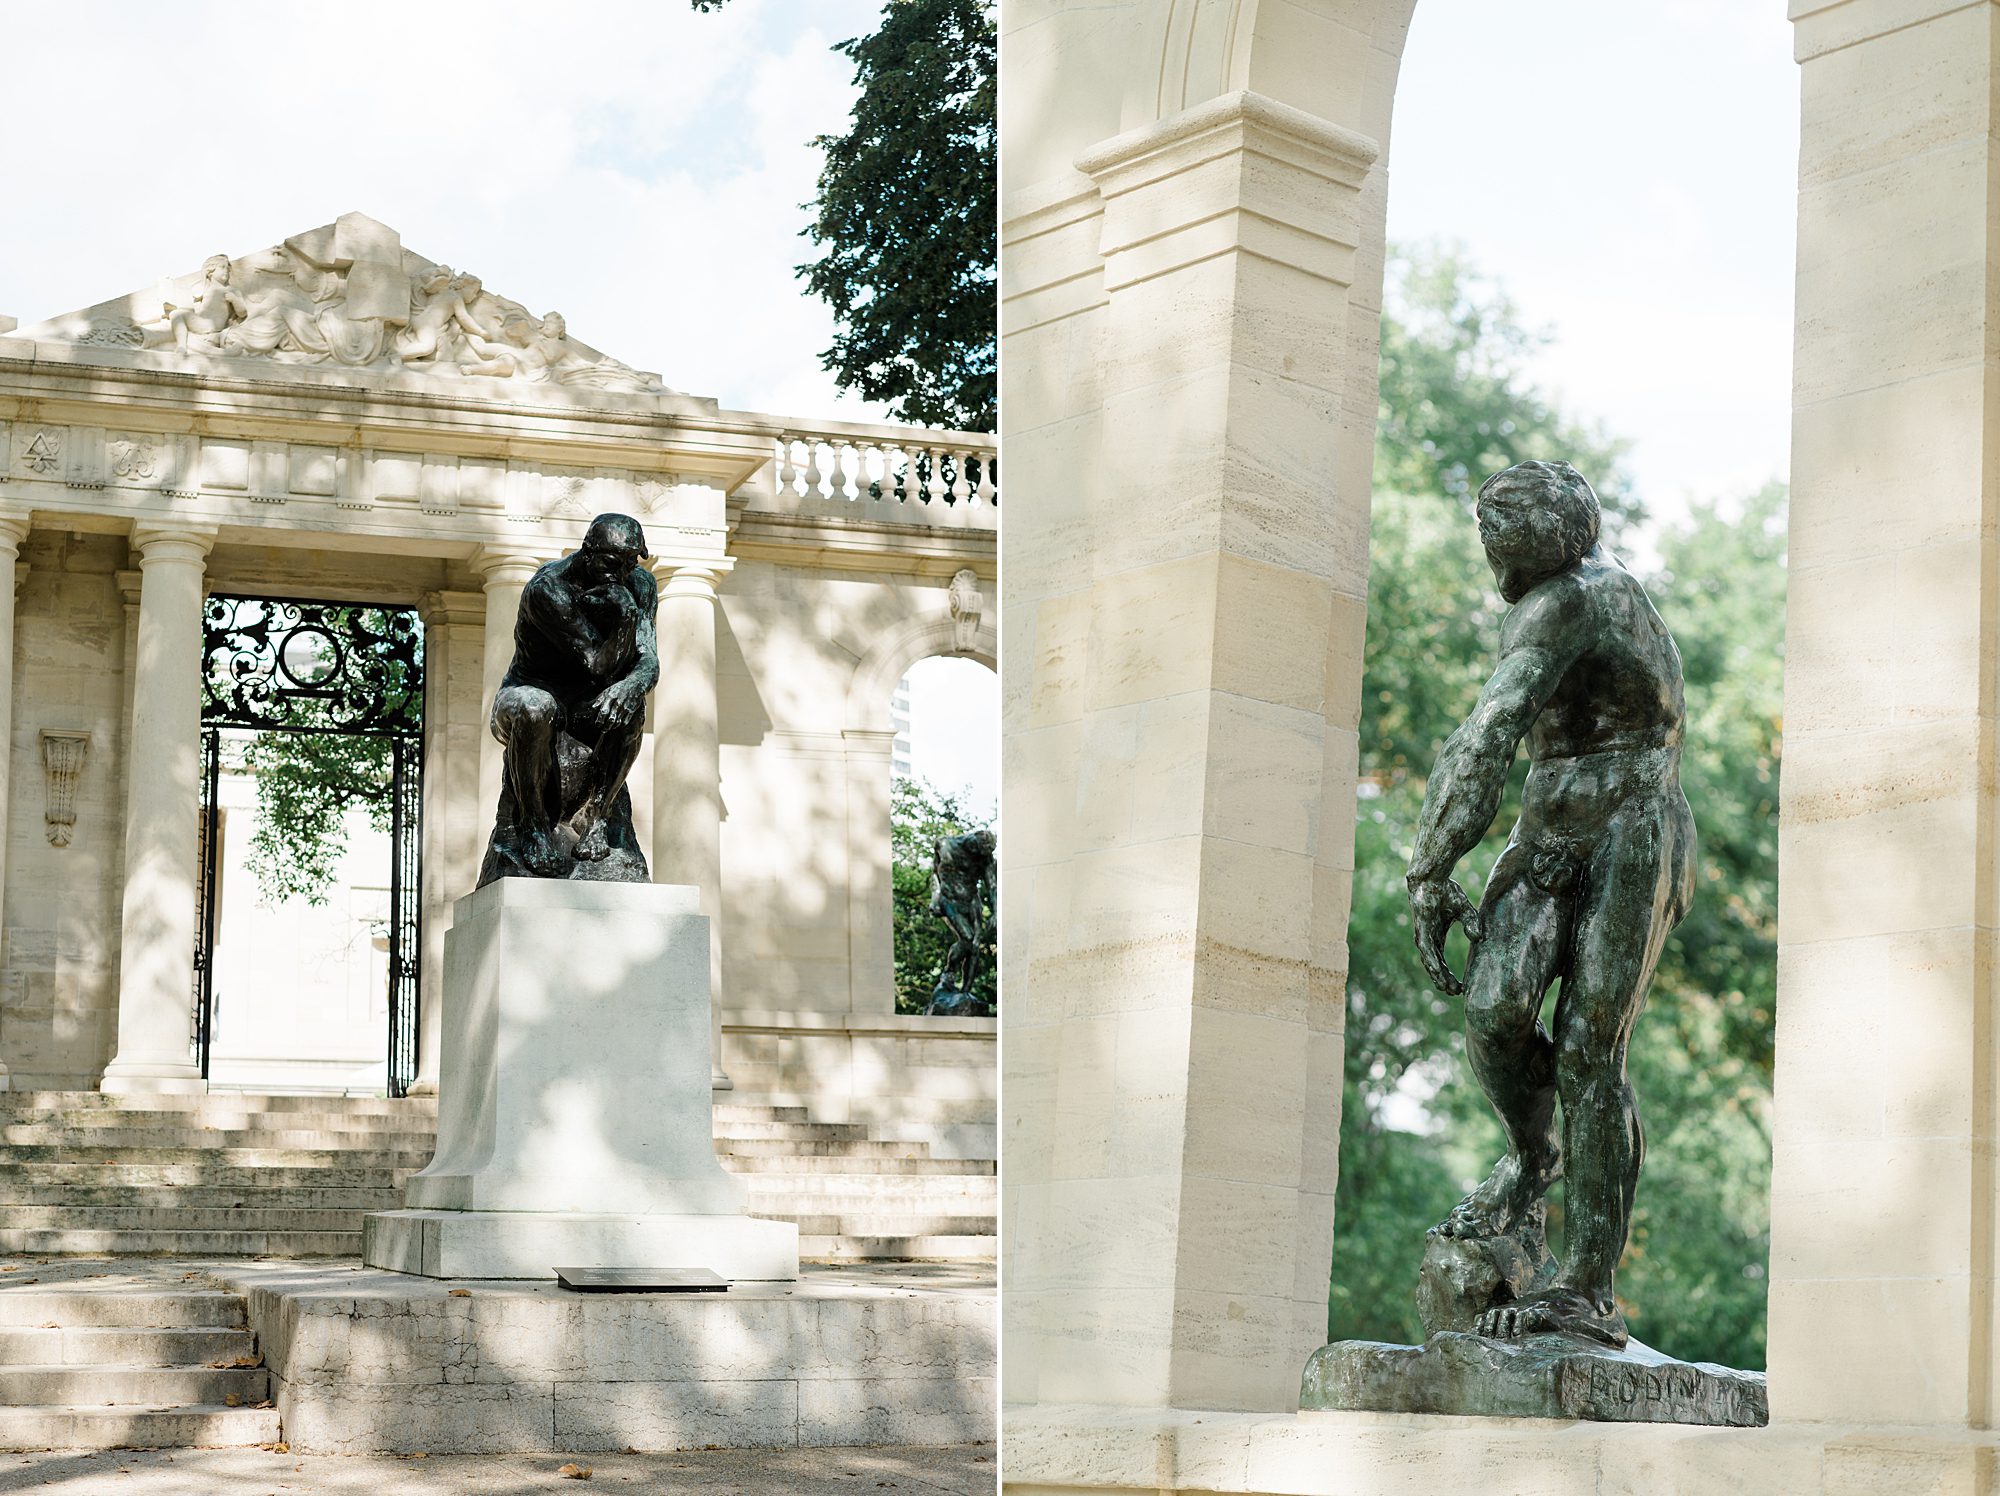 sculptures in front of the Rodin Museum in Philadelphia